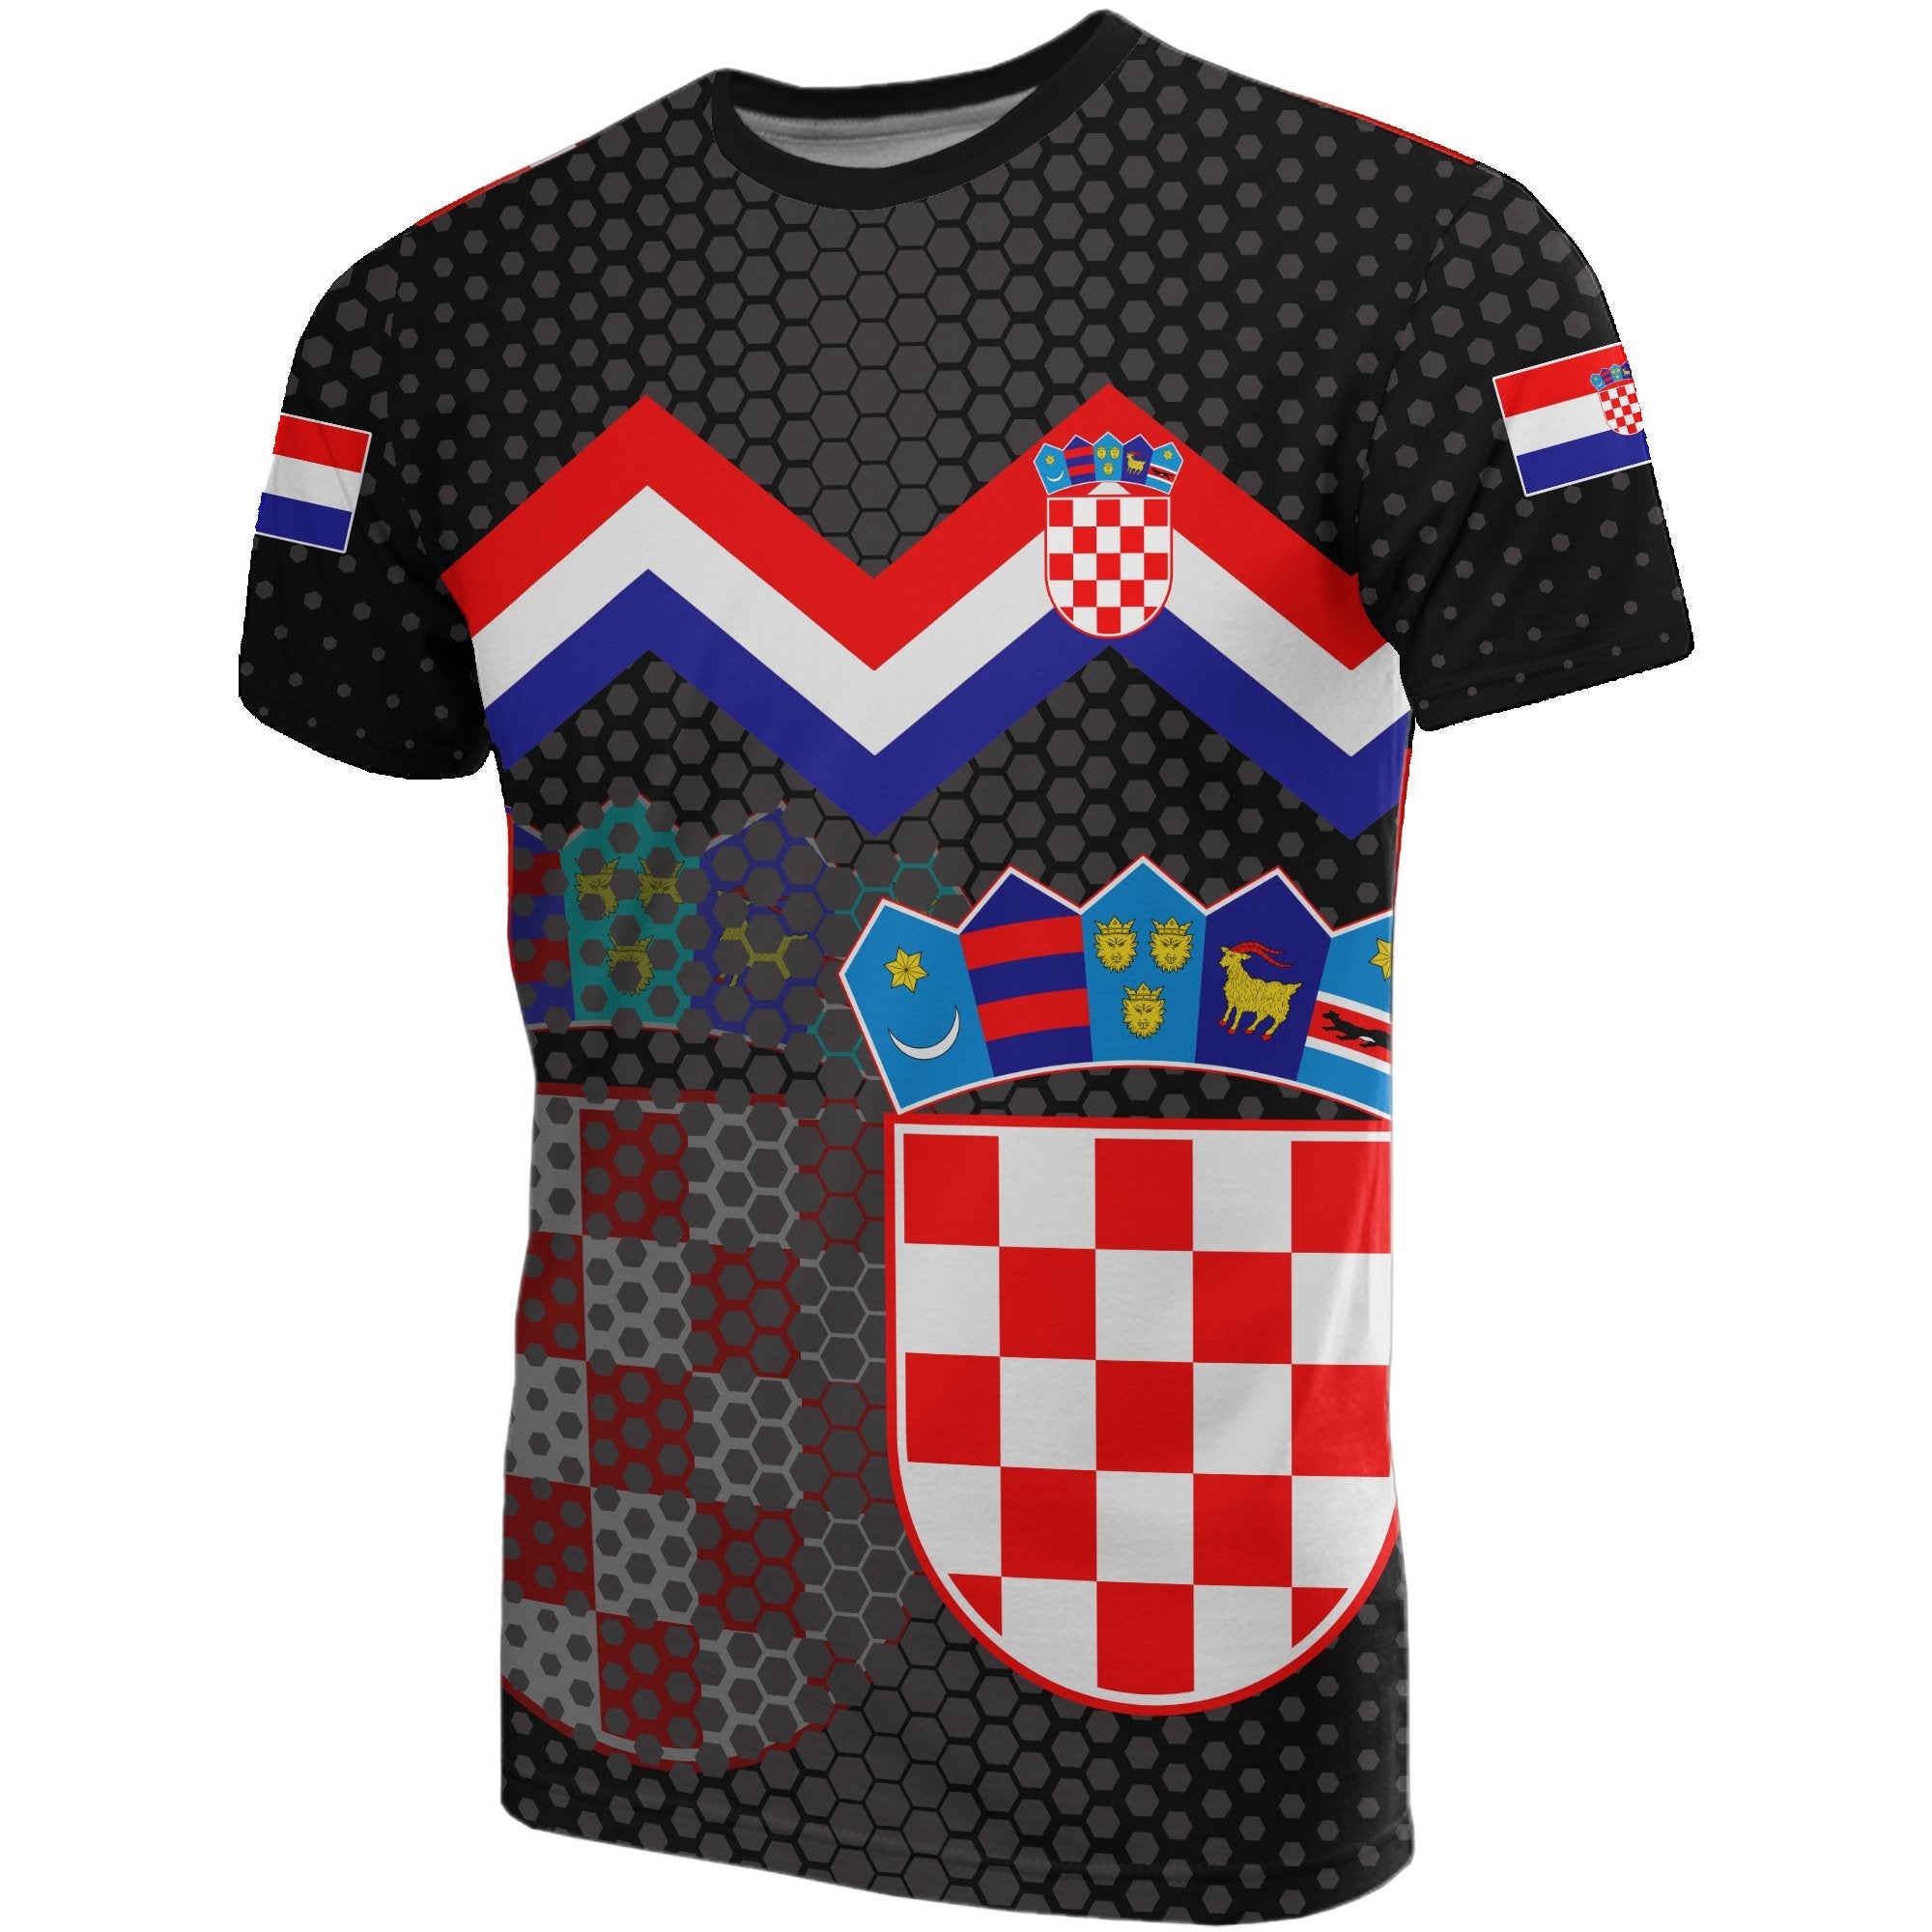 hrvatska-croatia-coat-of-arms-t-shirt-black-1st